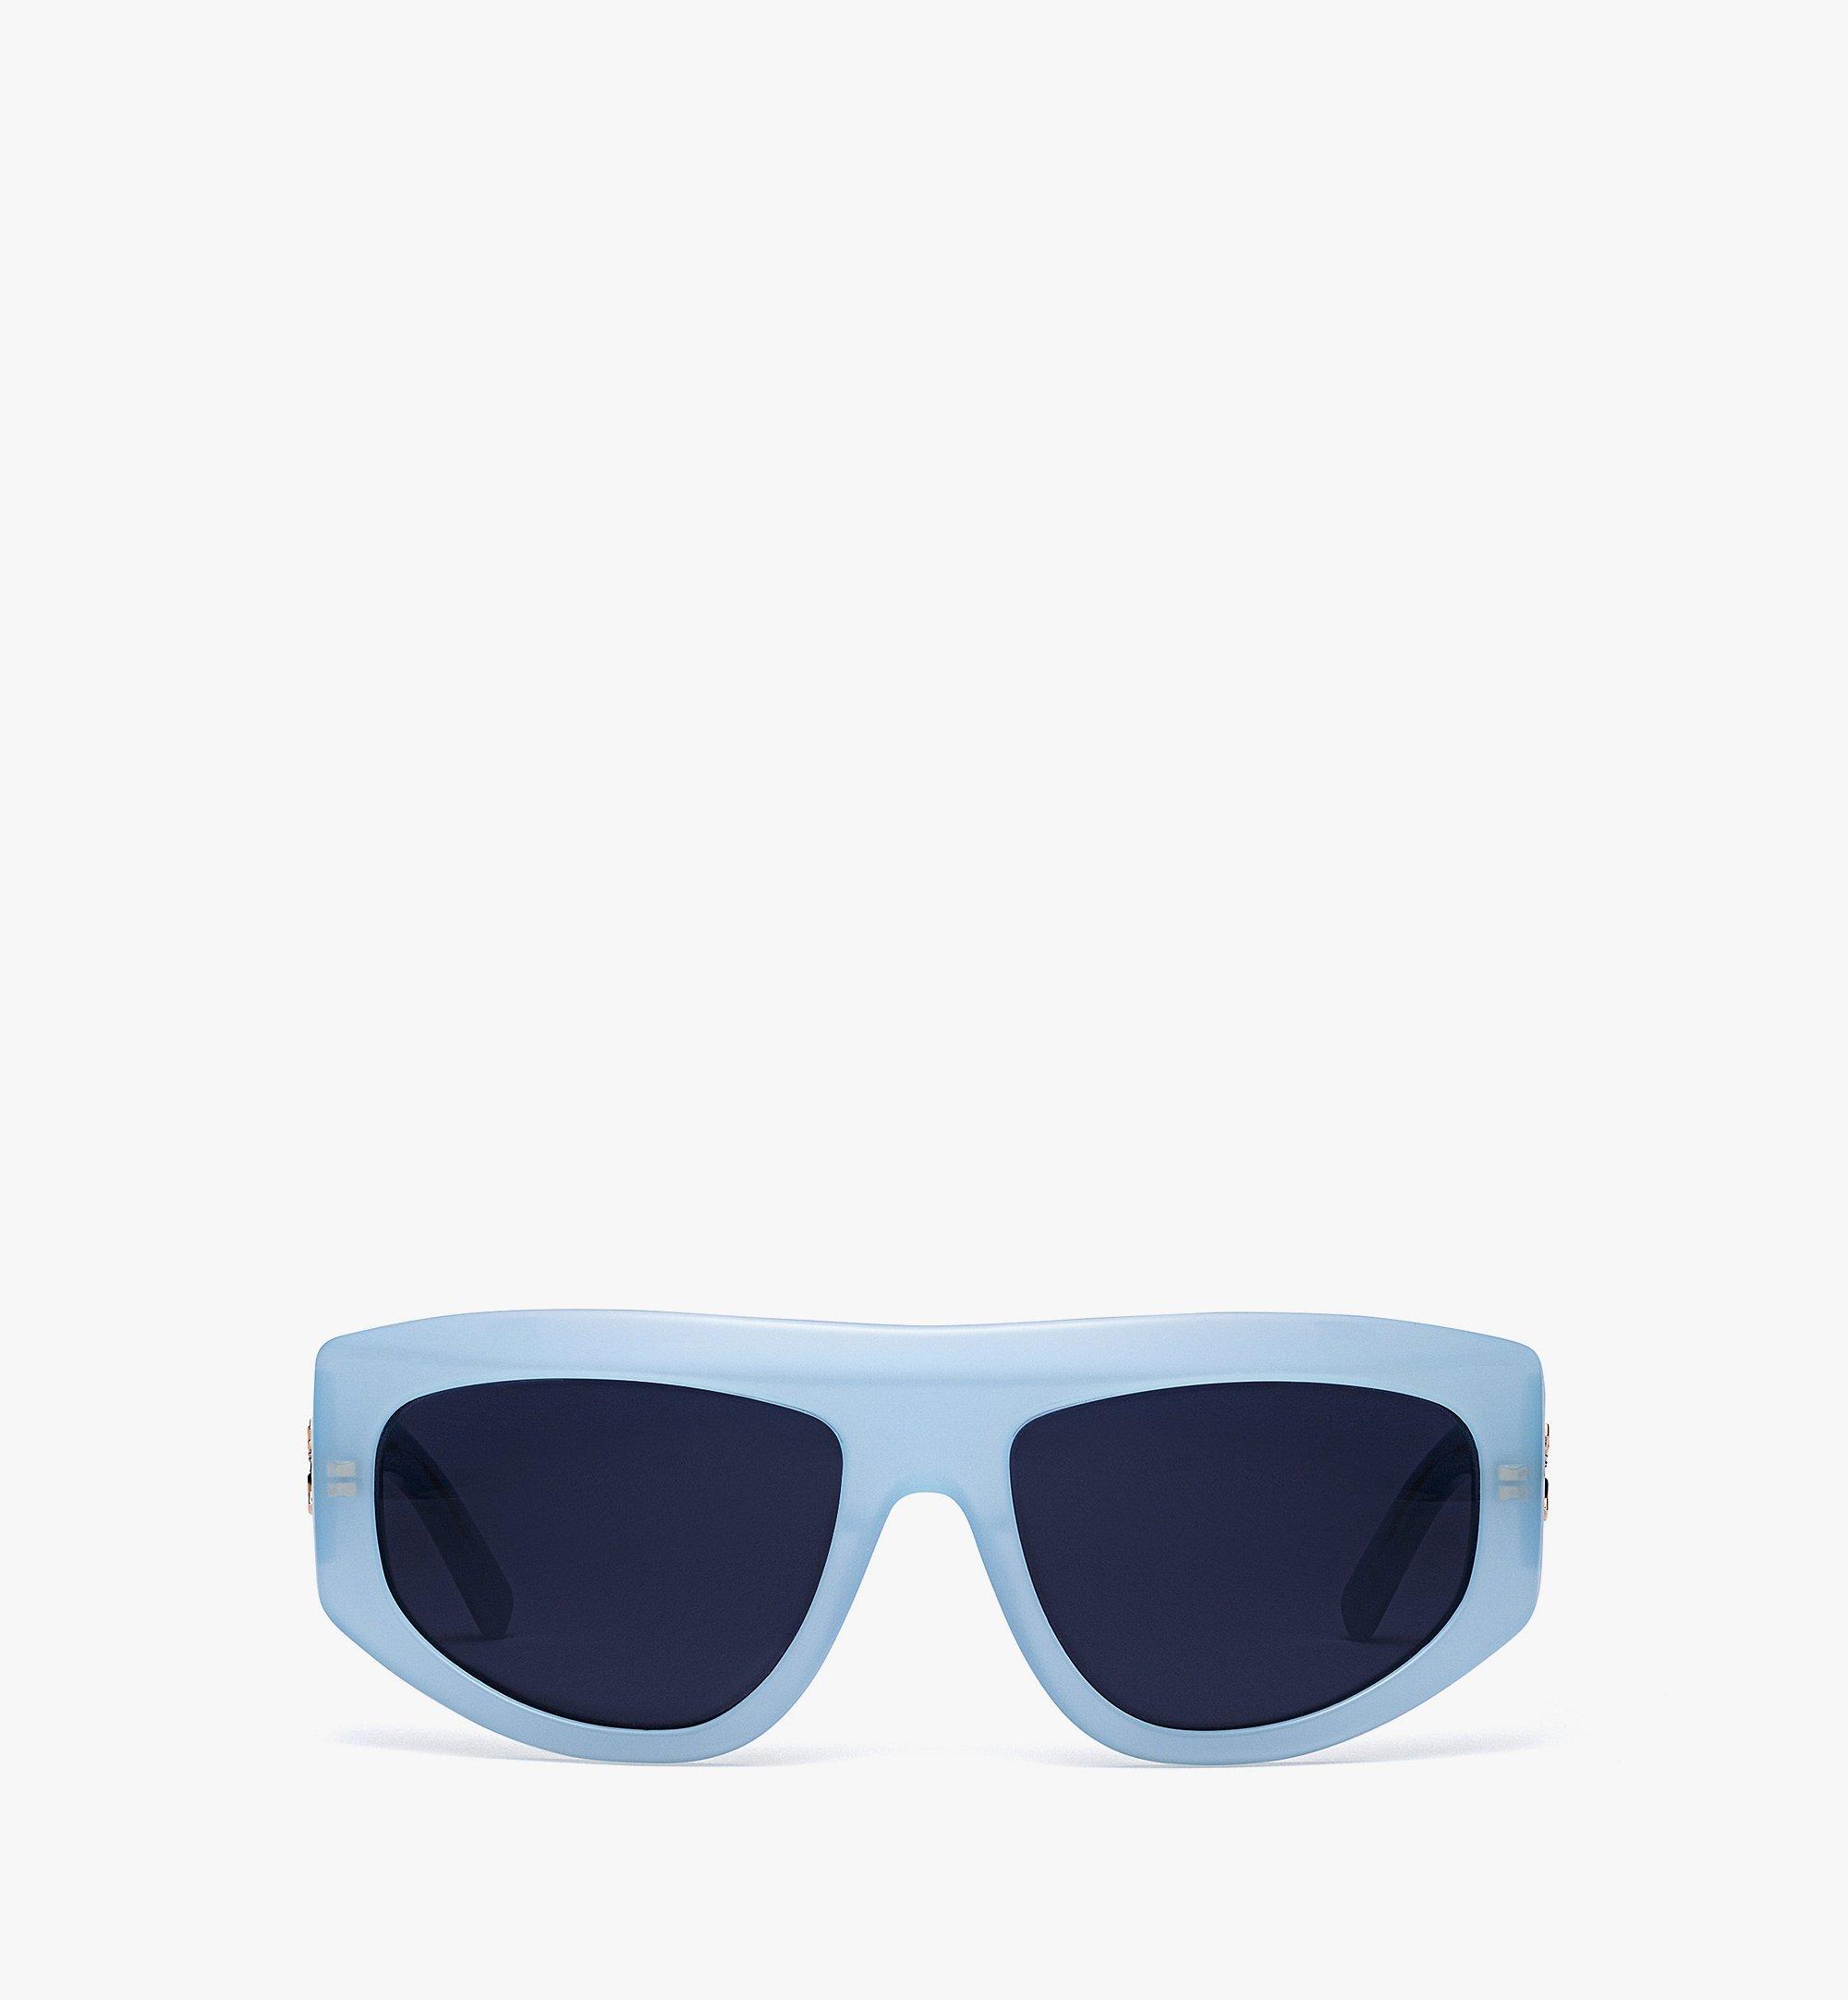 Men's Sunglasses, Aviator, Rectangular & Navigator